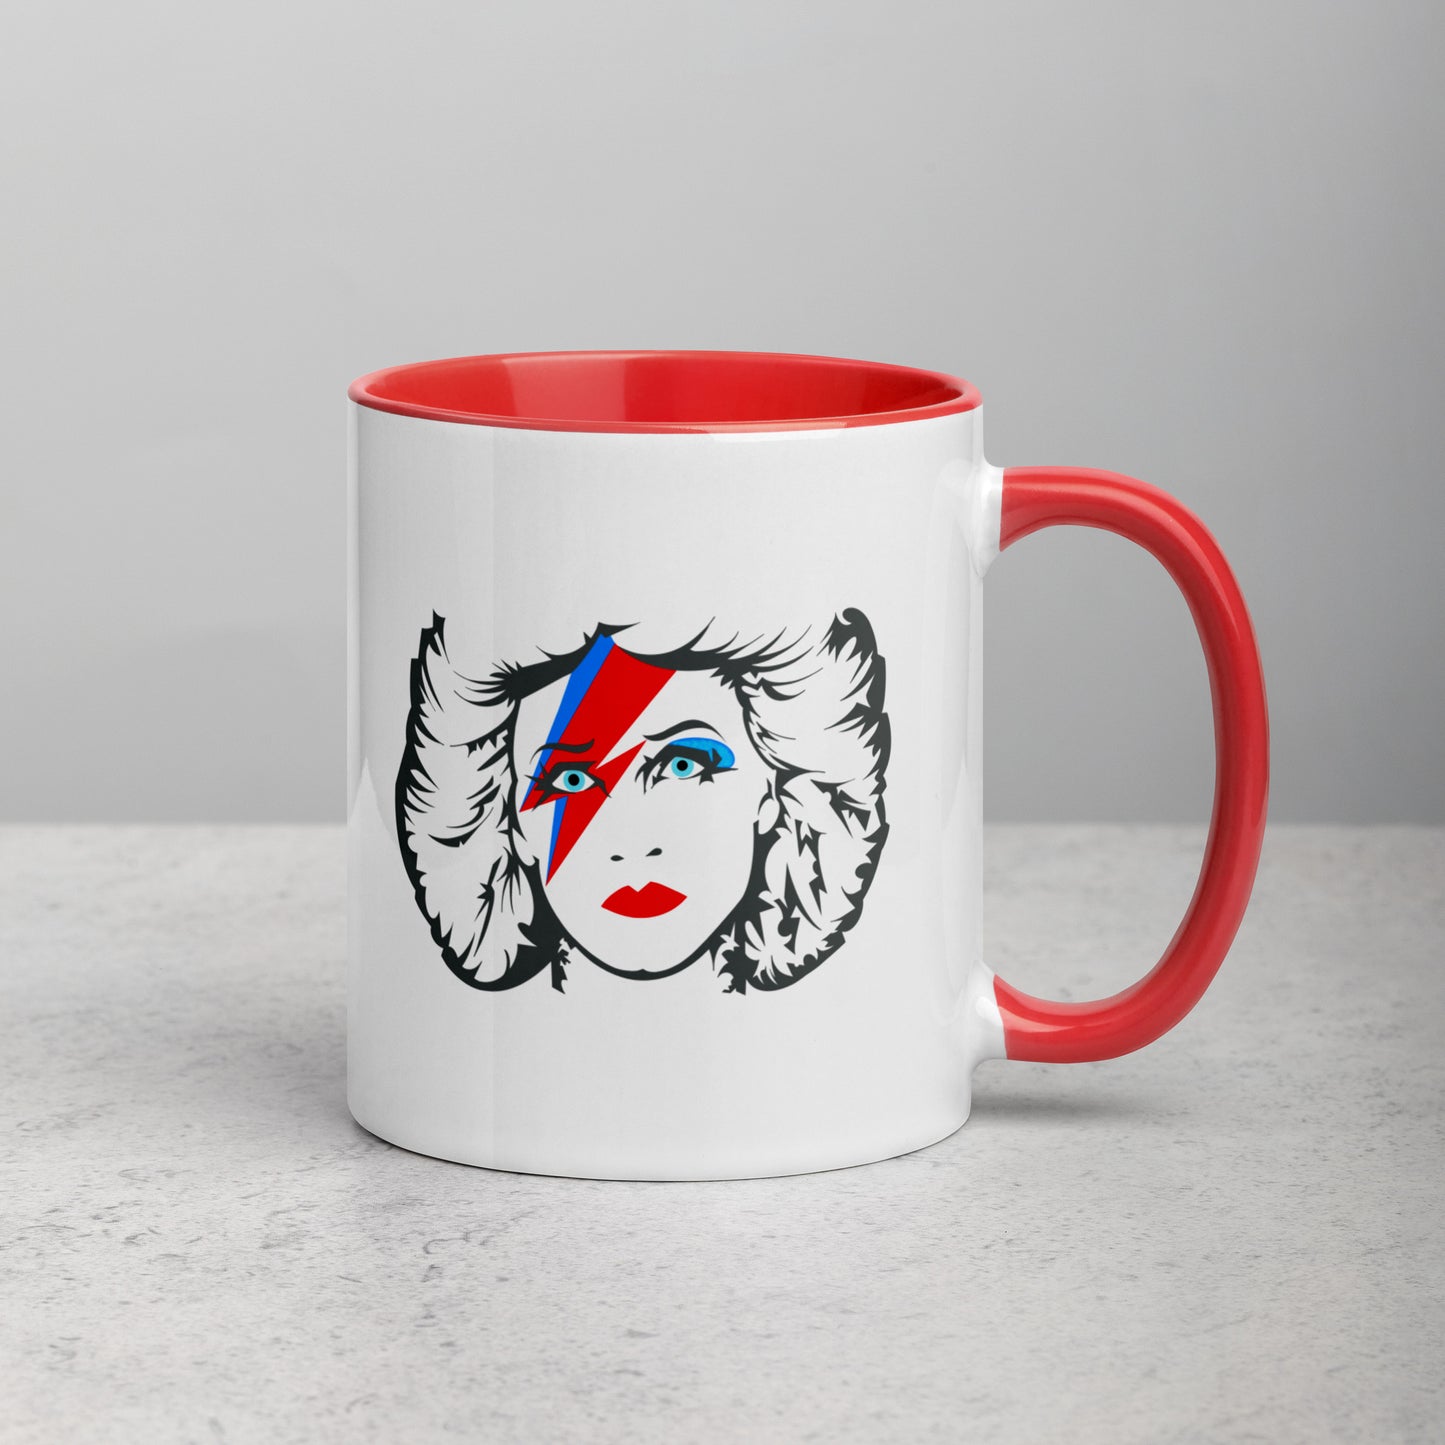 Hedwig Moonage Daydream mug with color inside